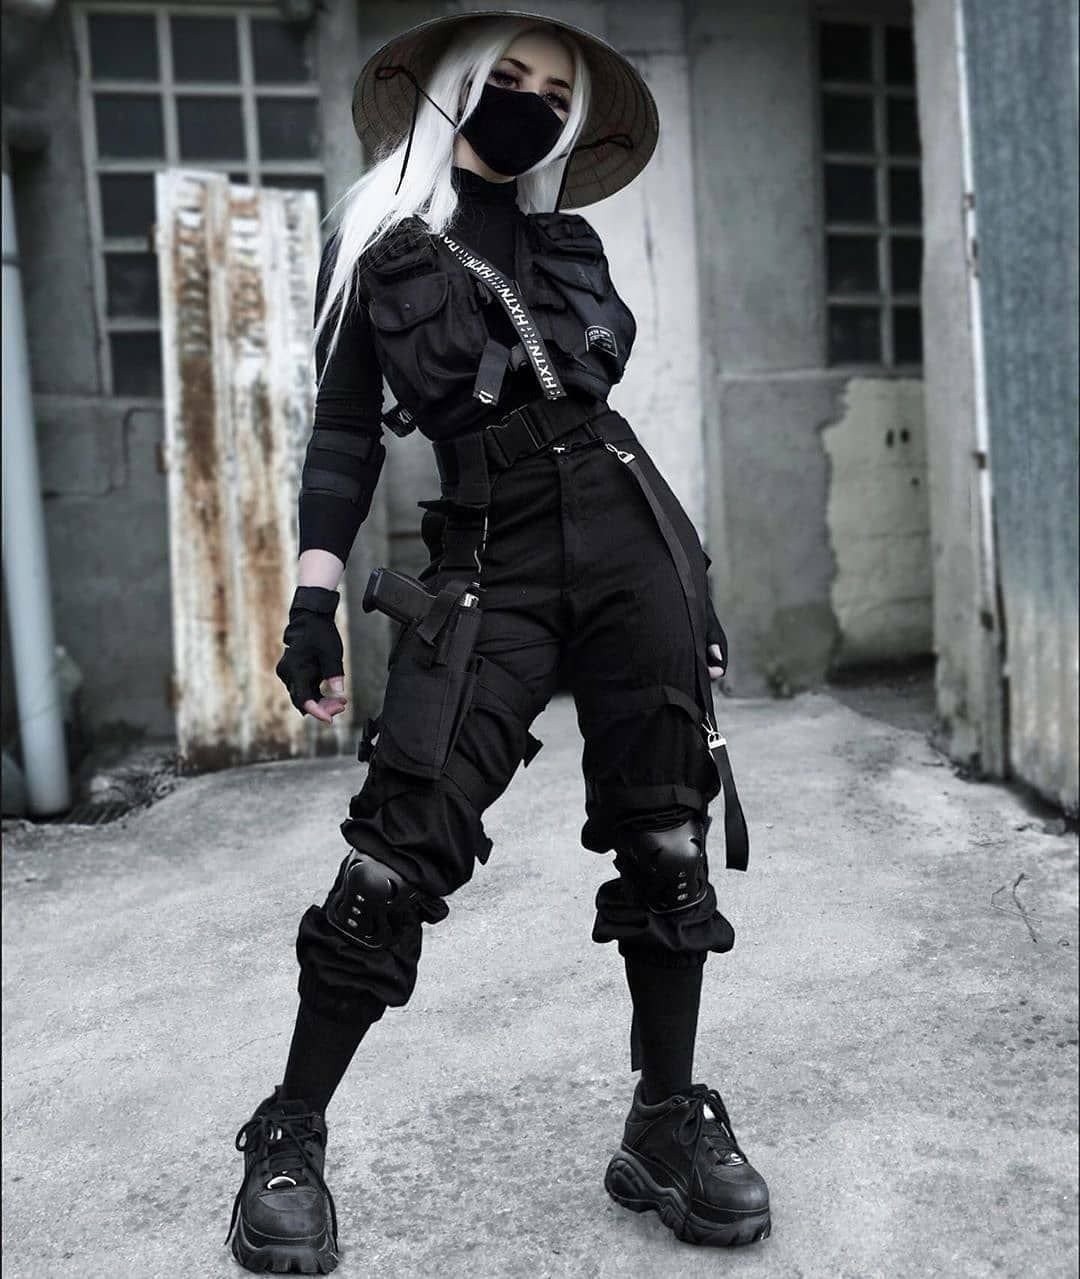 Cyberpunk clothes style фото 24